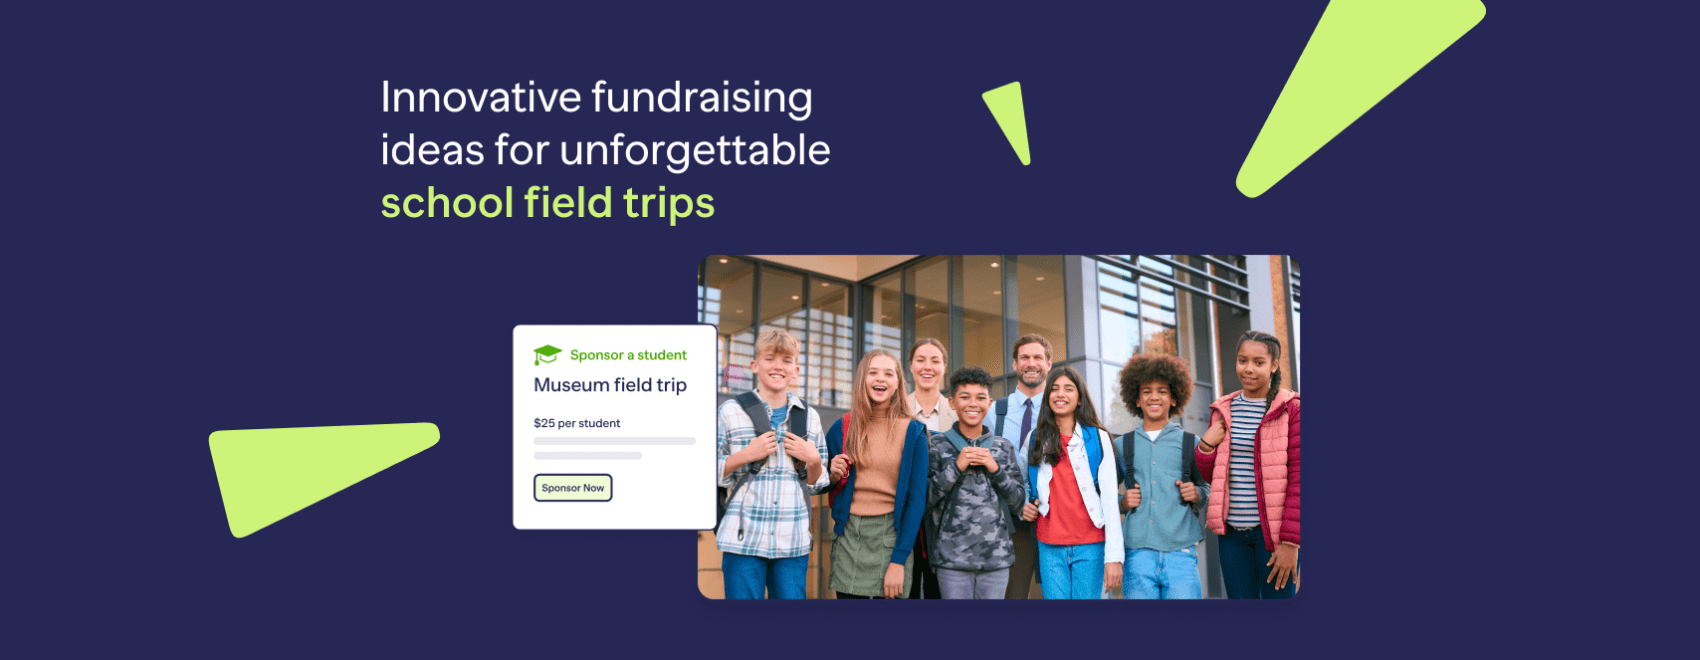 Innovative fundraising ideas for unforgettable school field trips